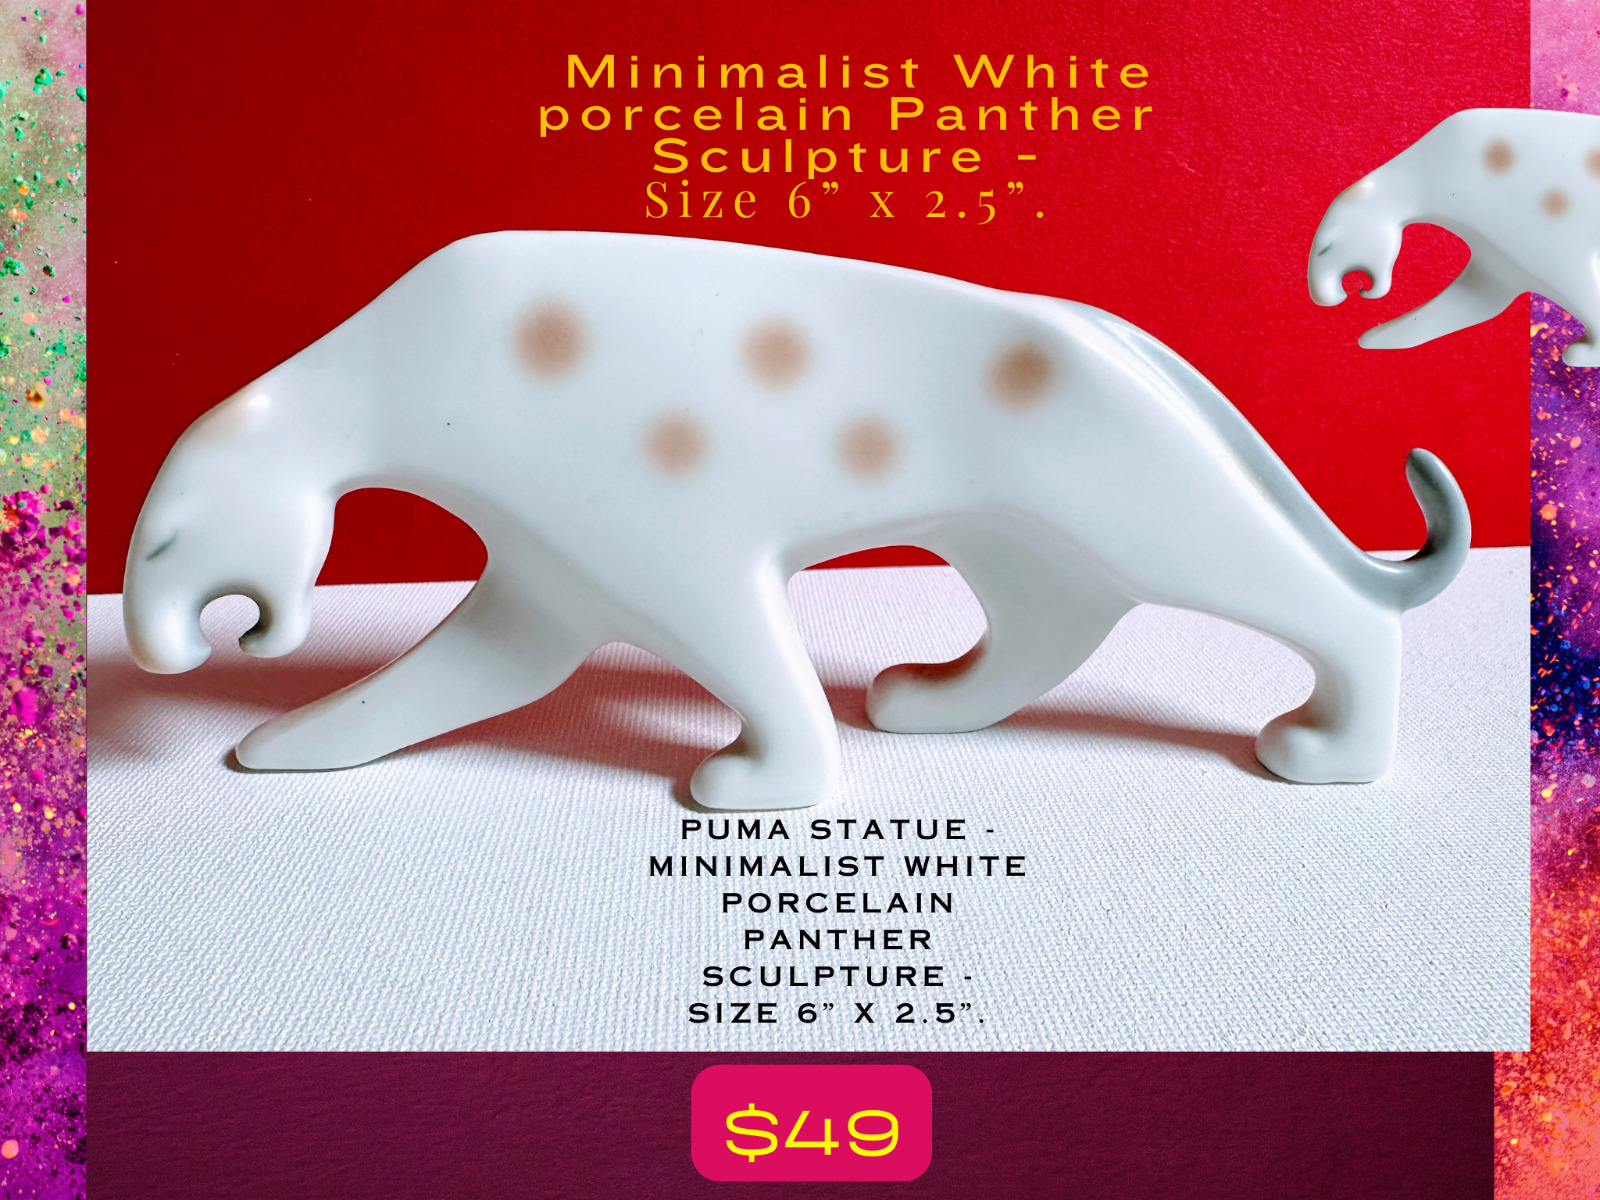 Minimalist White porcelain Panther Sculpture - Size 6” x 2.5”.